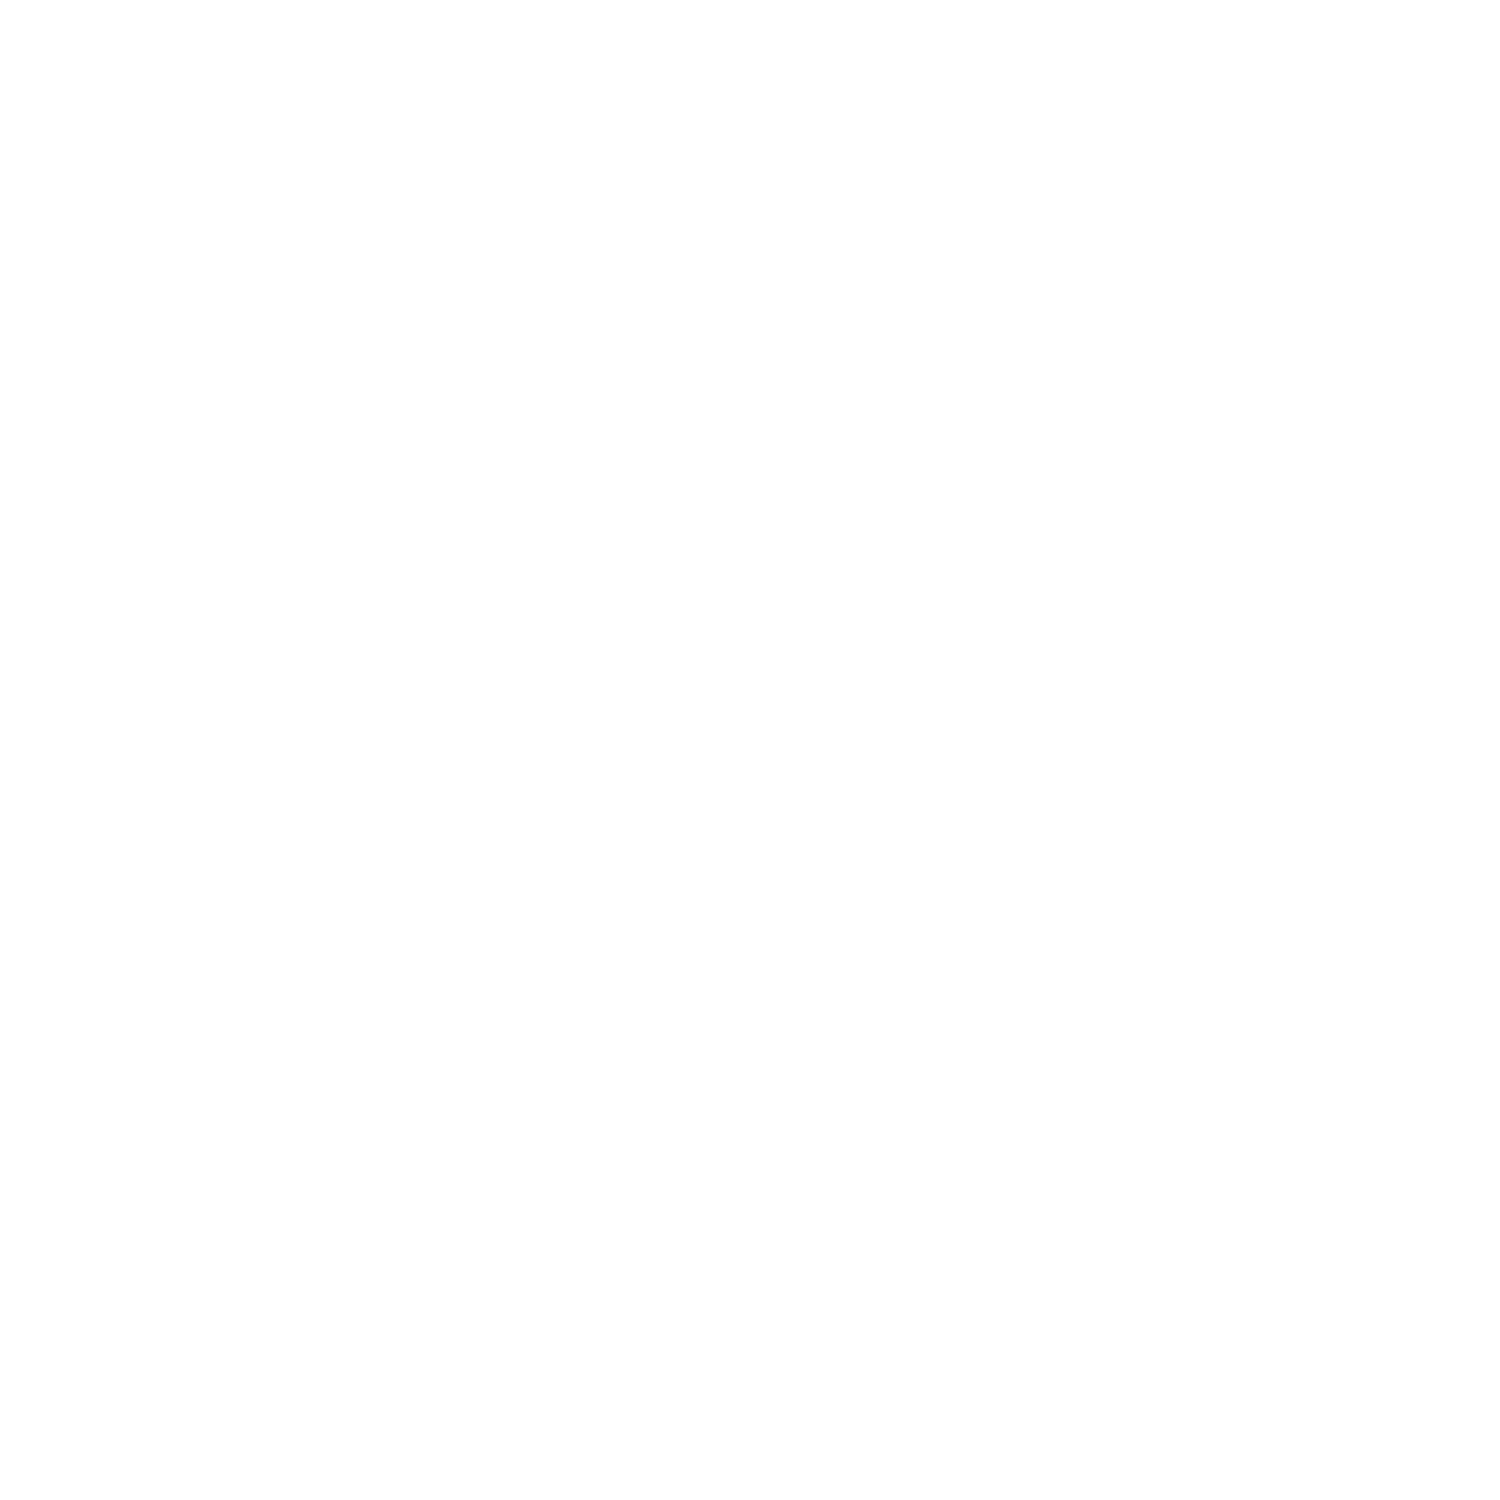 Live Wire Radio